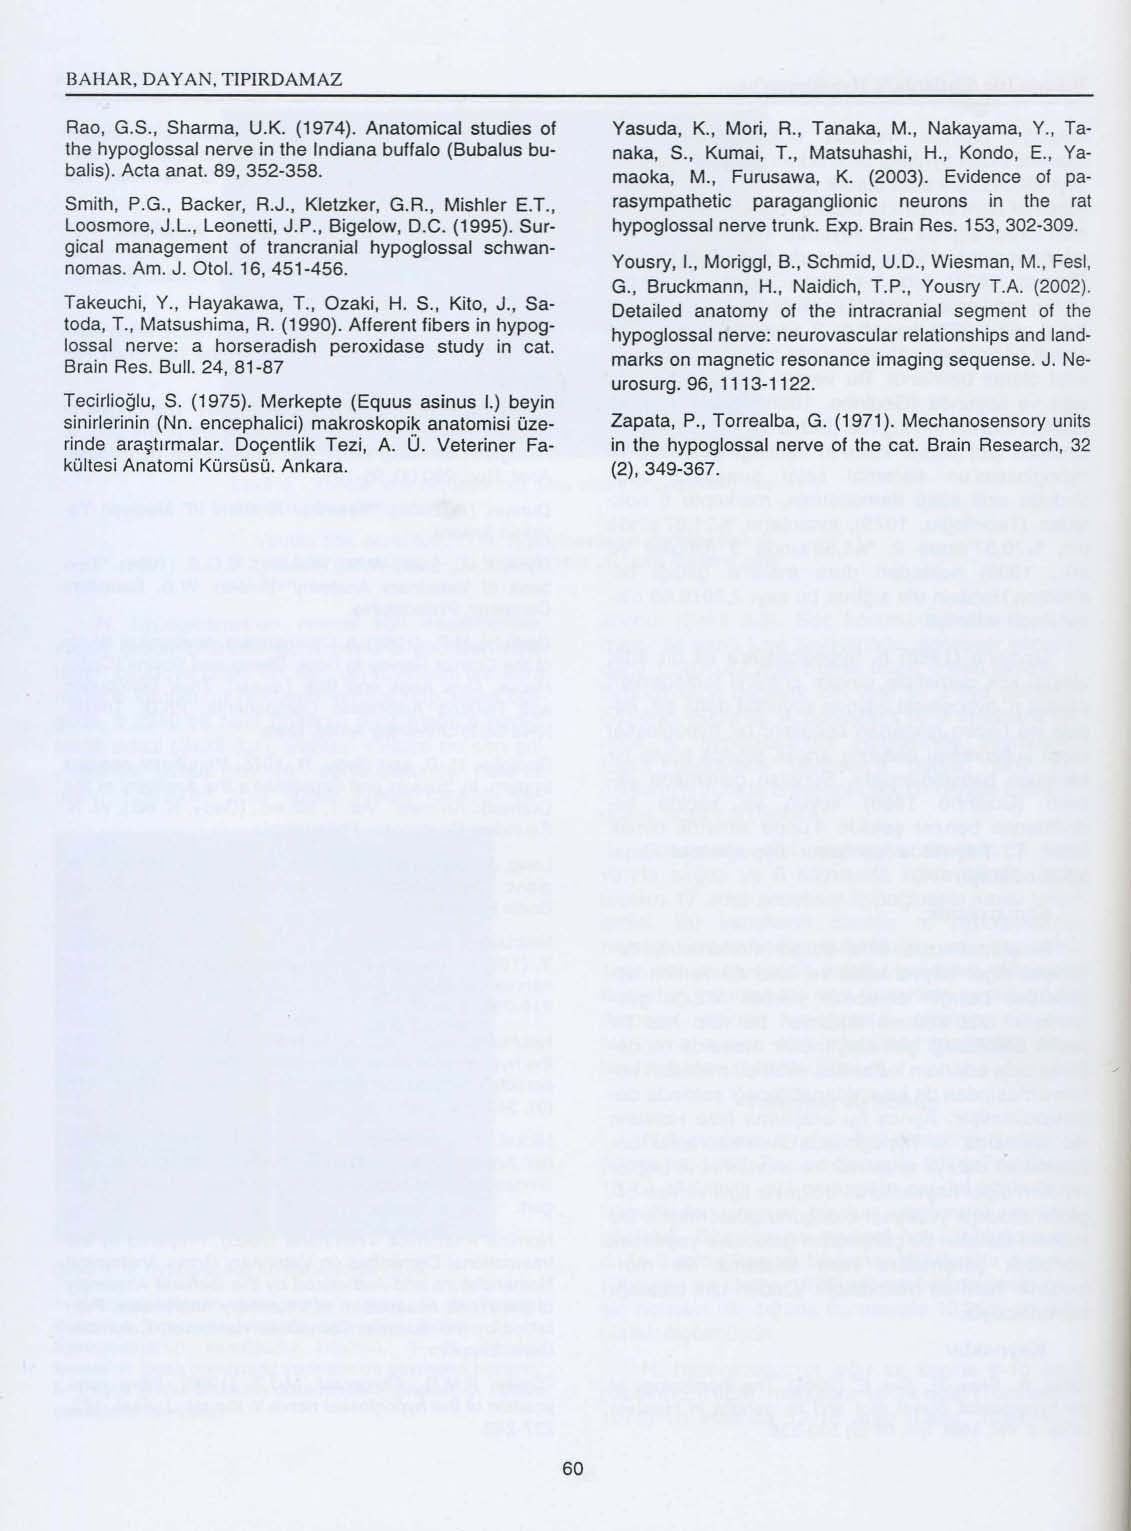 BAHAR, DA YA N, TIPIRDAMAZ Rao, G.S., Sharma, U.K. (1974). Anatomical studies of the hypoglossal nerve in the Indiana buffalo (Bubal us bubalis). Acta anal. 89, 352-358. Smith, P.G., Backer, R.J.